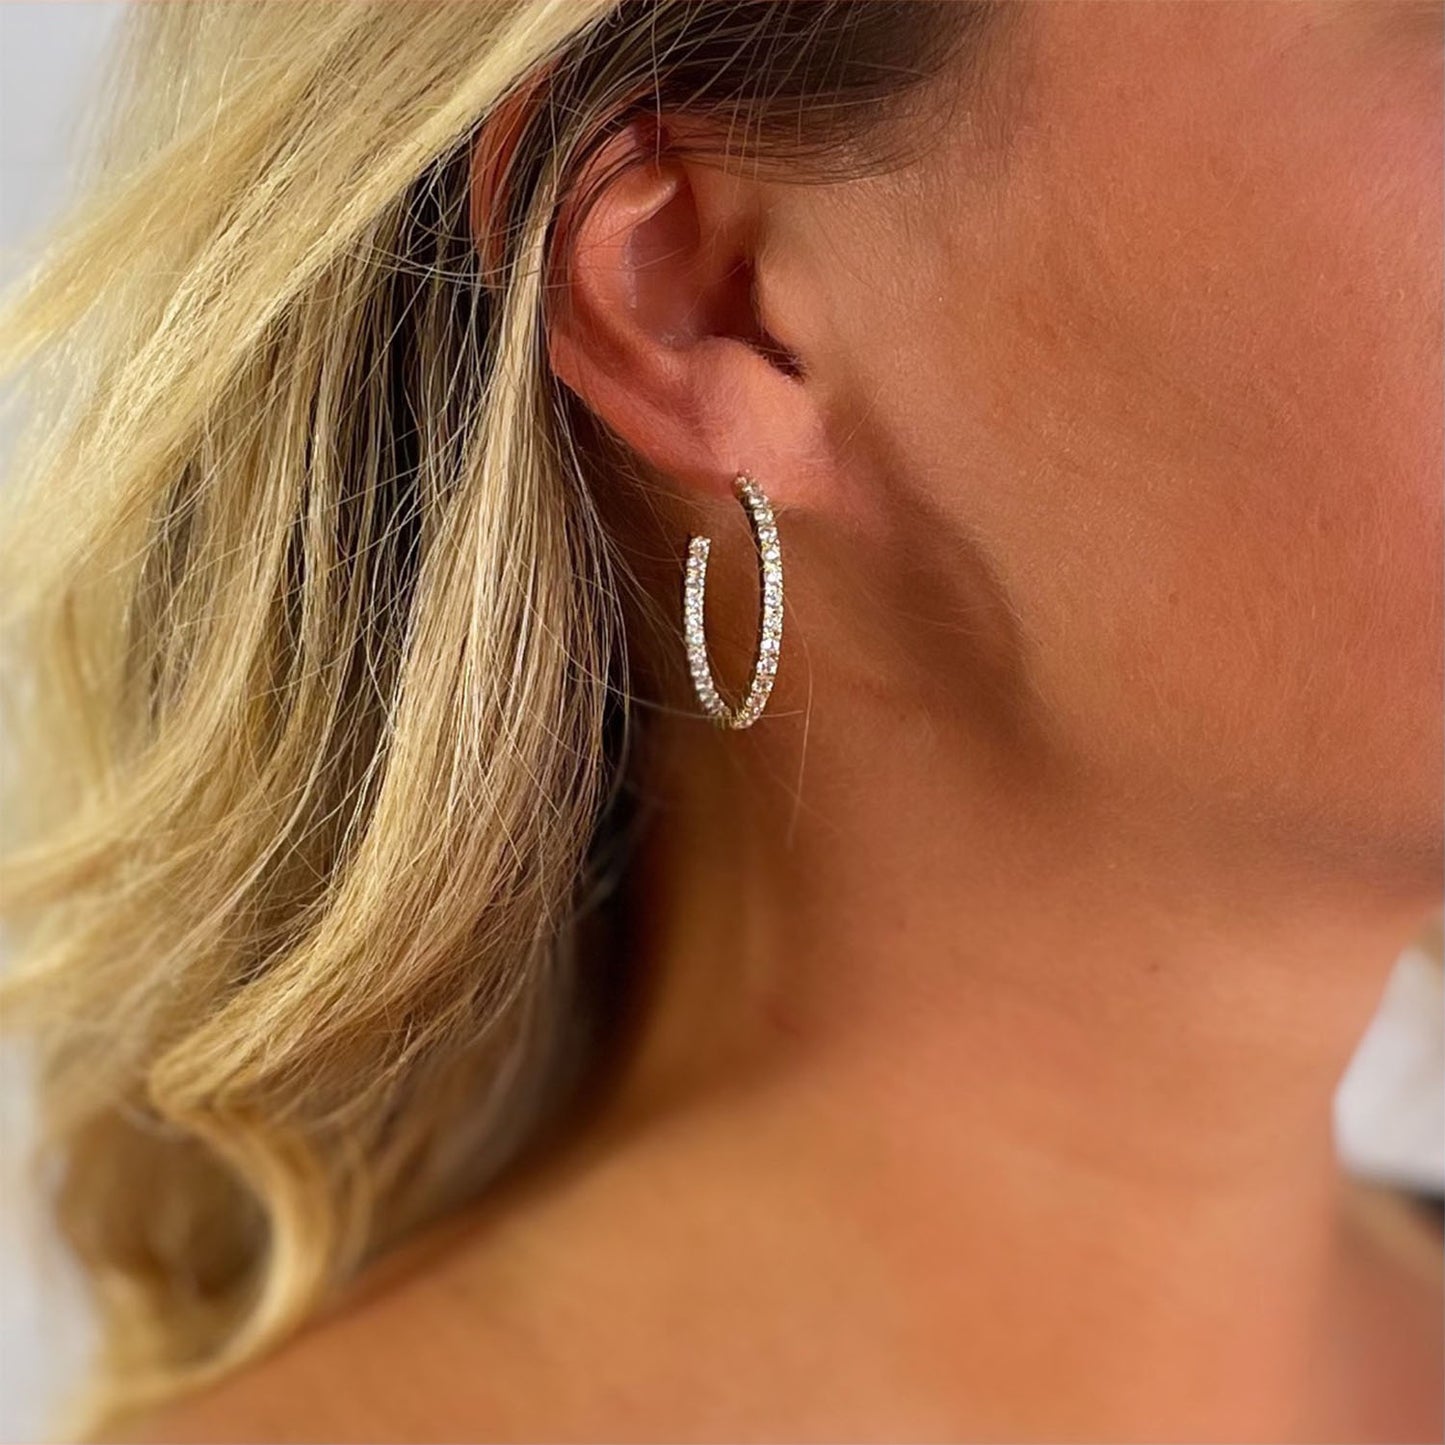 Bella 30mm Pave CZ Diamond Hoop Earrings, Gold - Zahra Jewelry